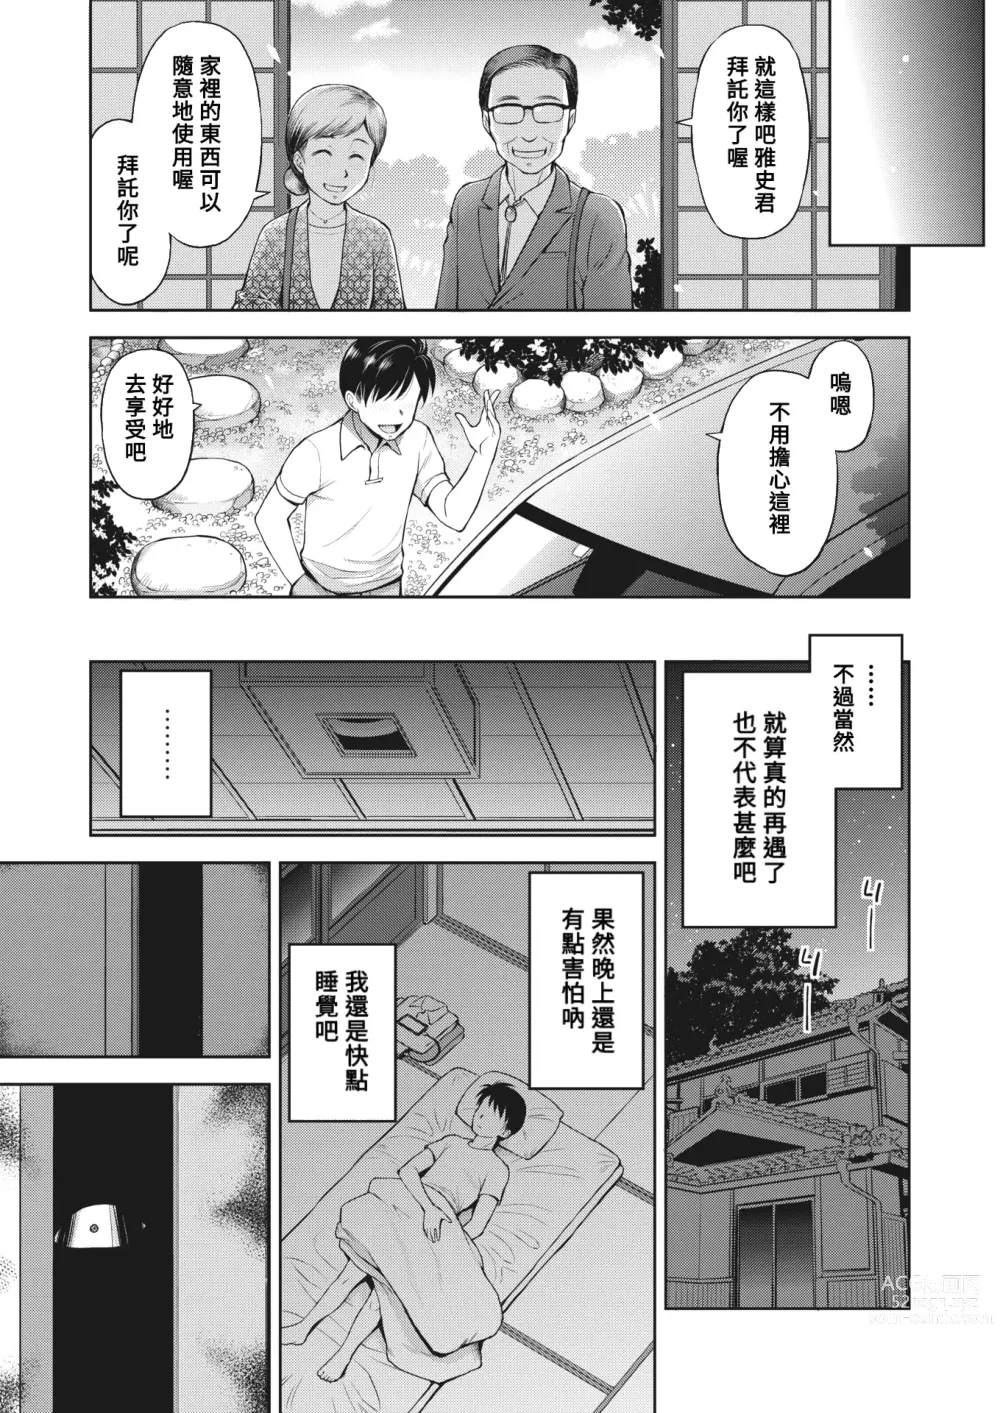 Page 5 of manga Oshiire Kaikitan